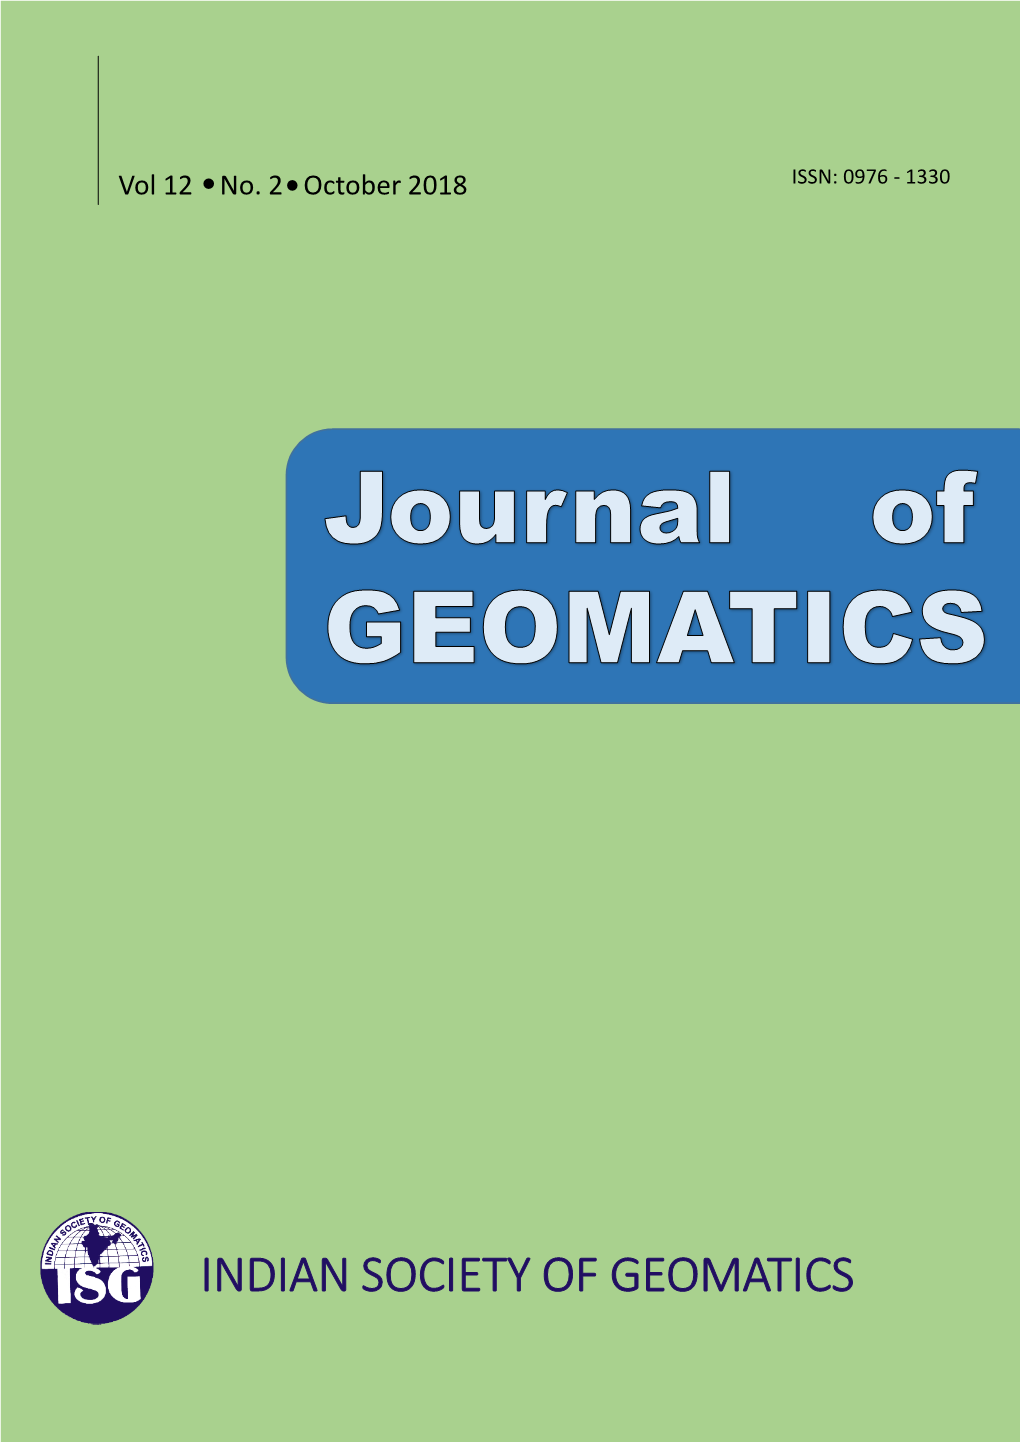 INDIAN SOCIETY of GEOMATICS I Journal of Geomatics Vol